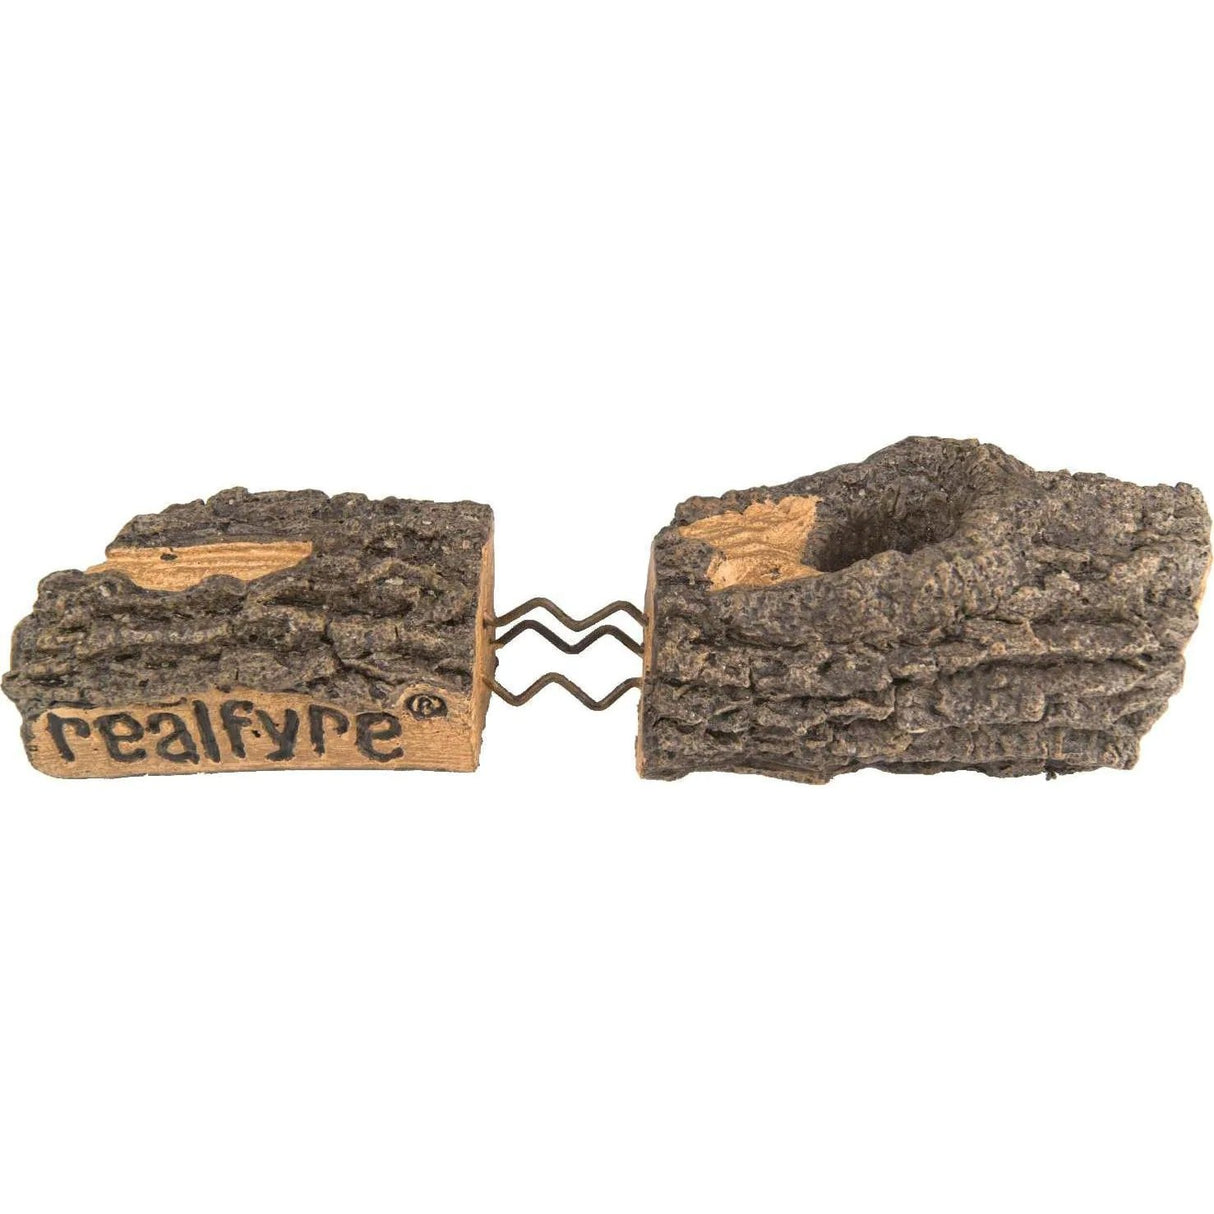 Peterson Real Fyre Mountain Crest Oak Gas Log Set With Vented ANSI Certified G31 Triple-Tier Burner